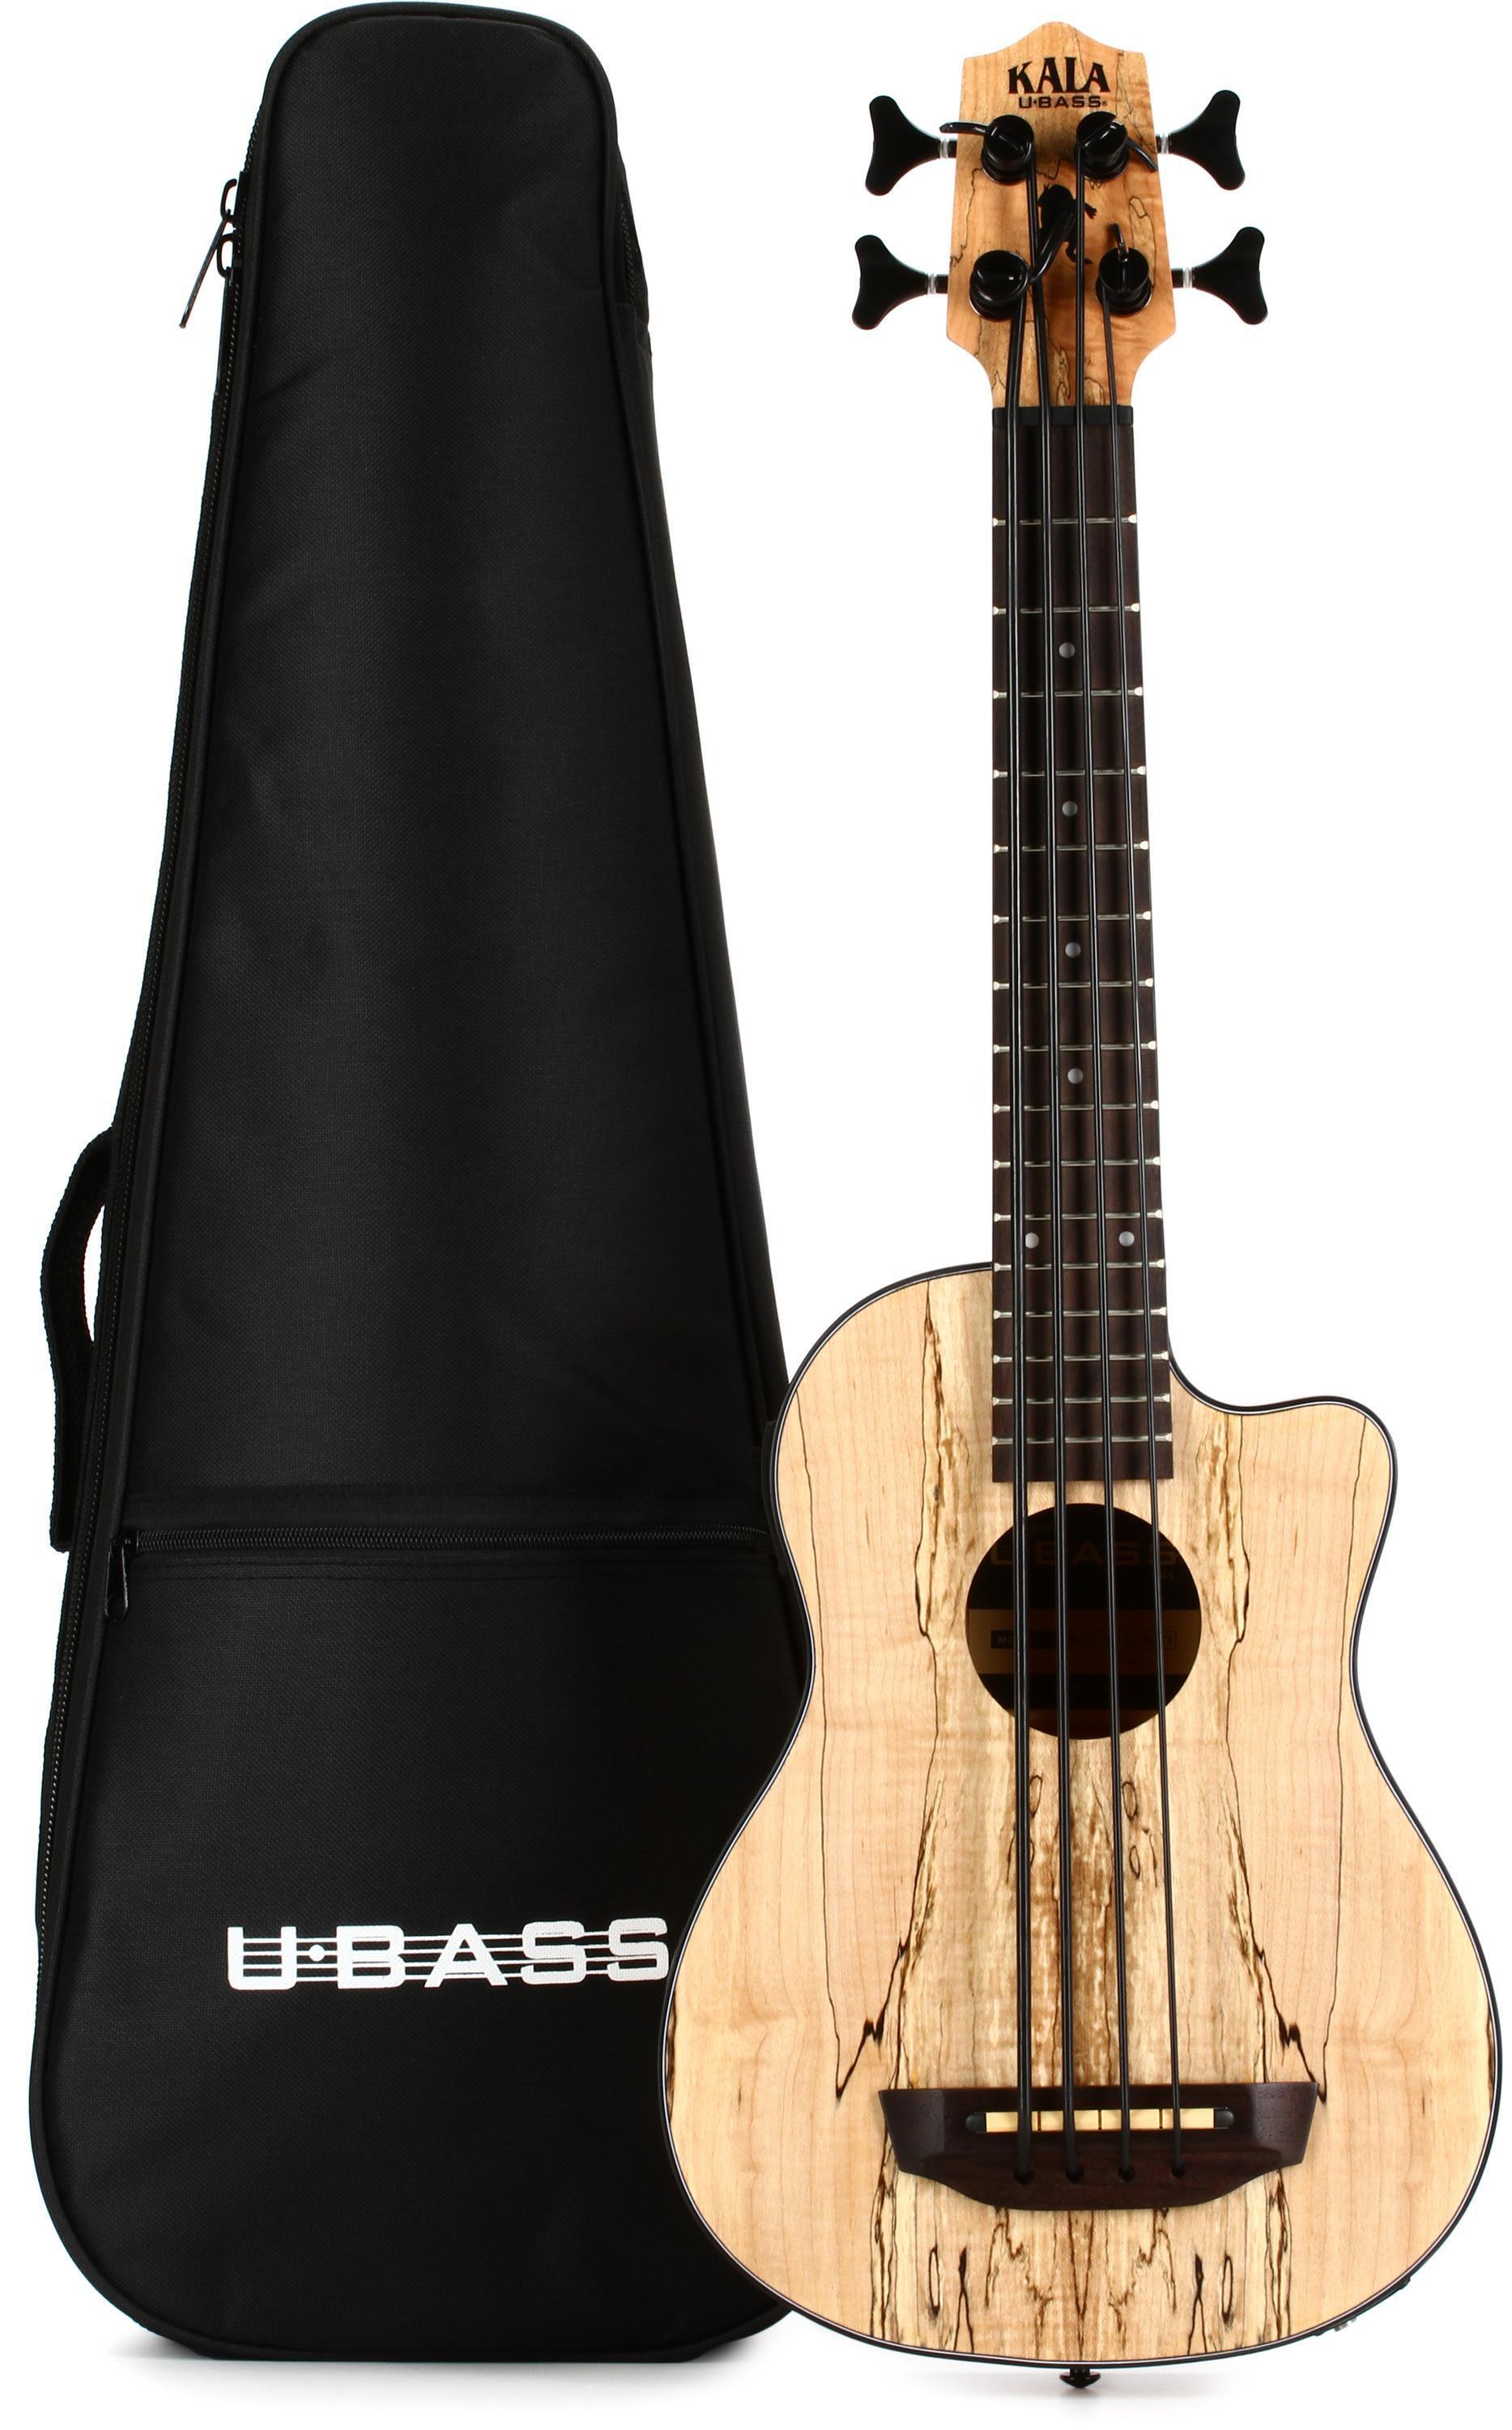 Bundled Item: Kala U-Bass Spalted Maple Acoustic-Electric Bass Guitar - Natural